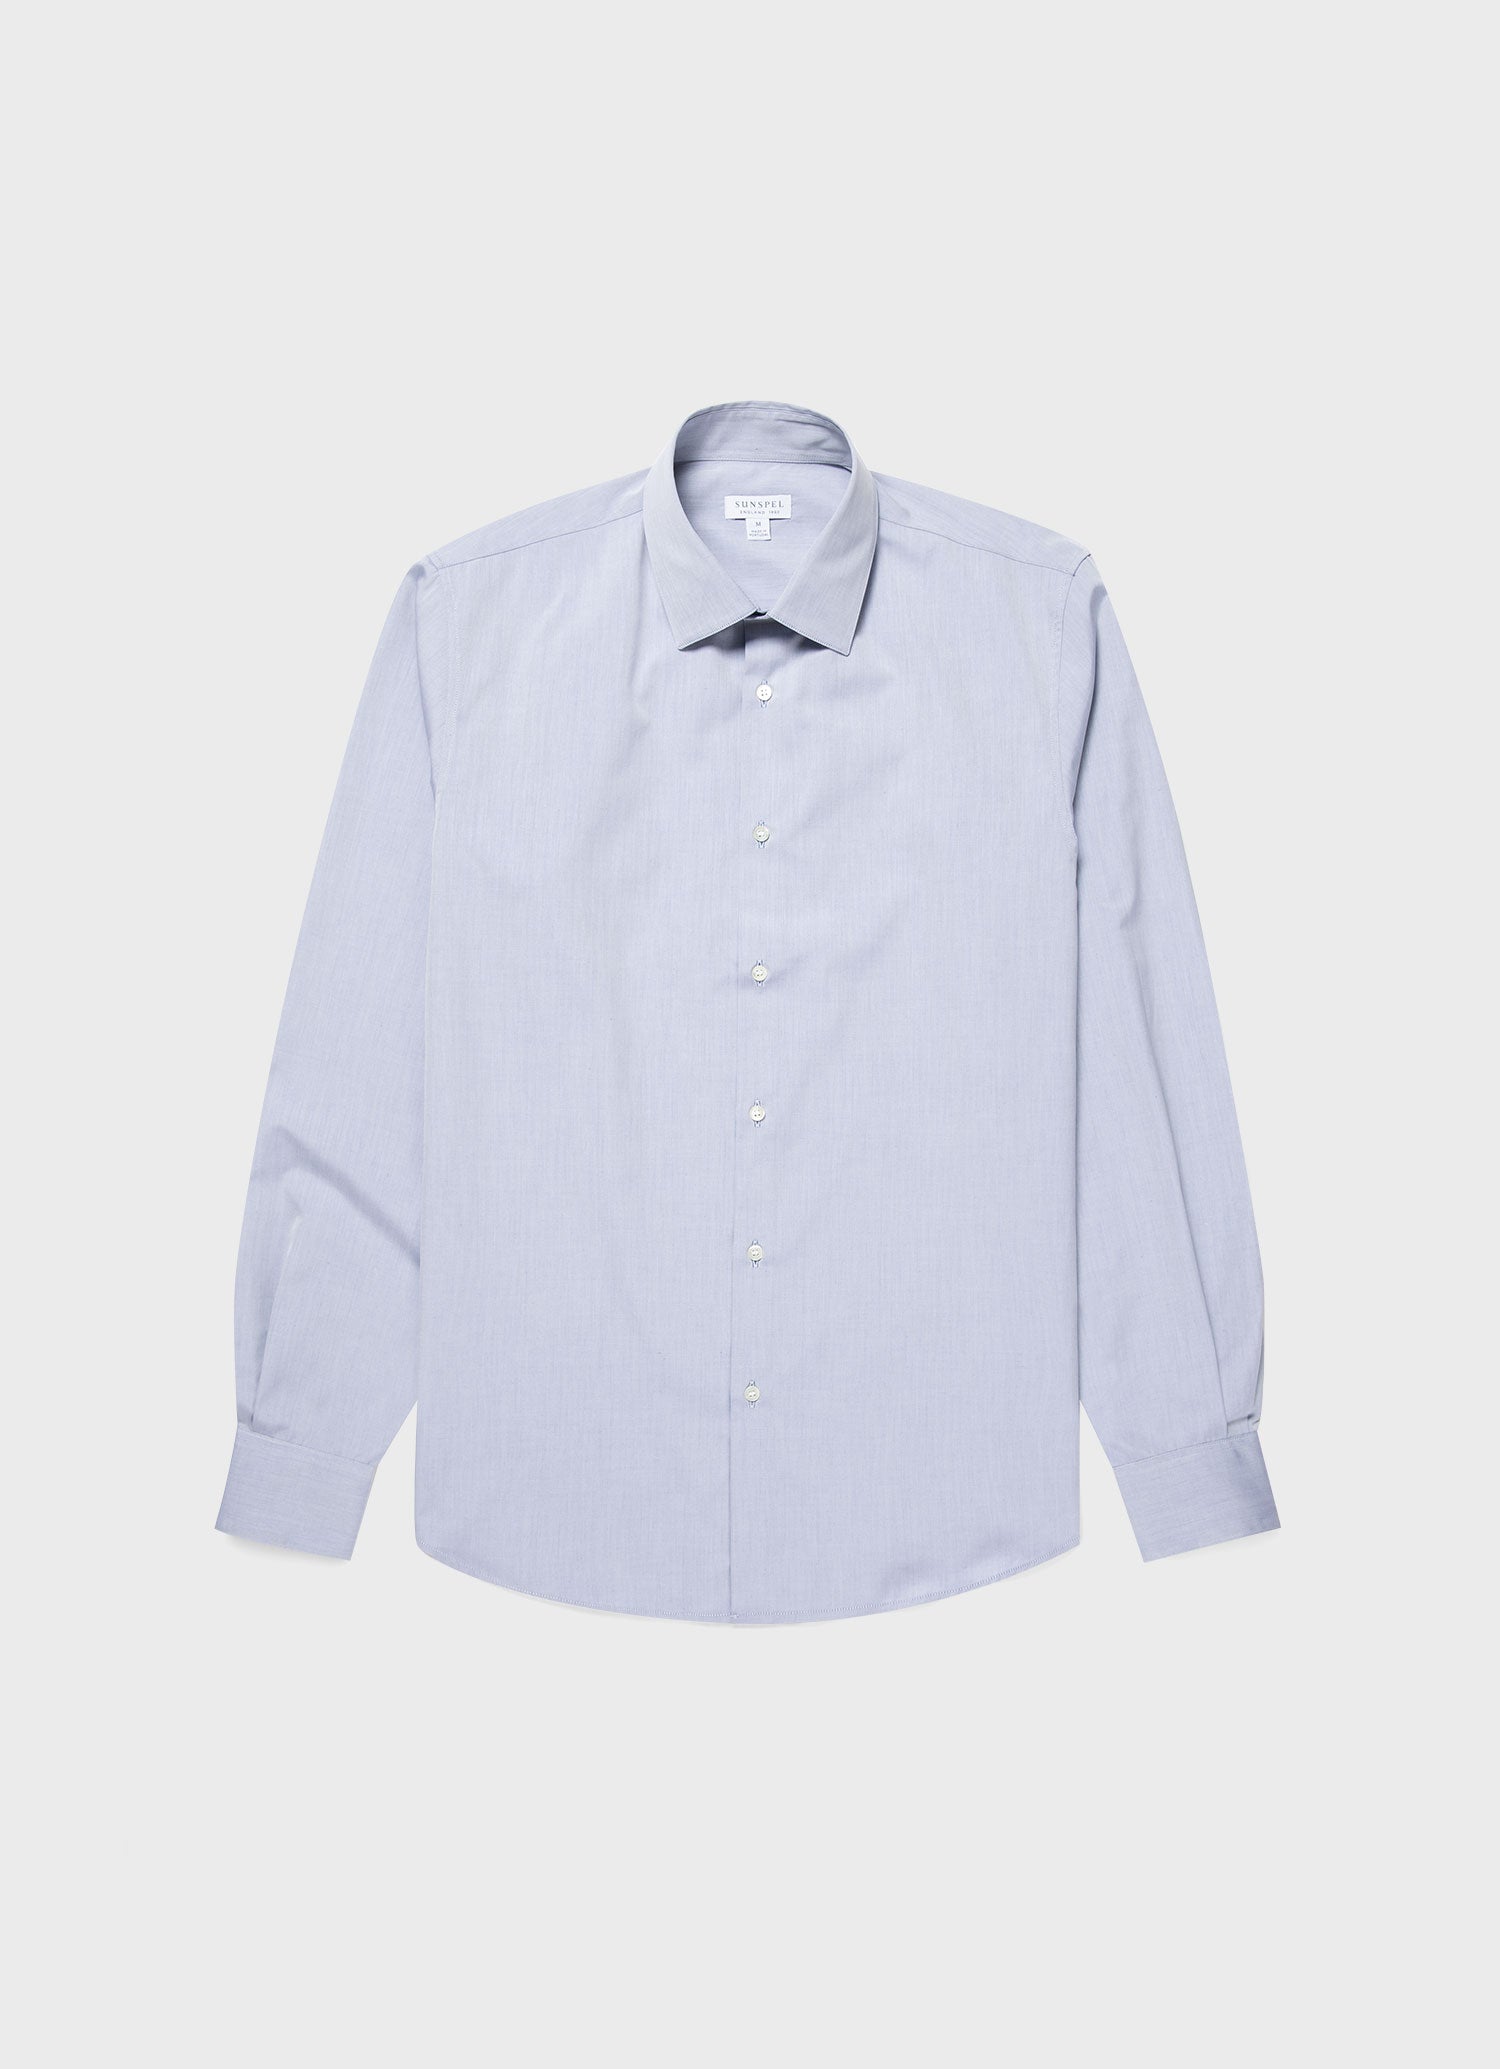 Men's Sea Island Cotton Shirt in Light Blue | Sunspel